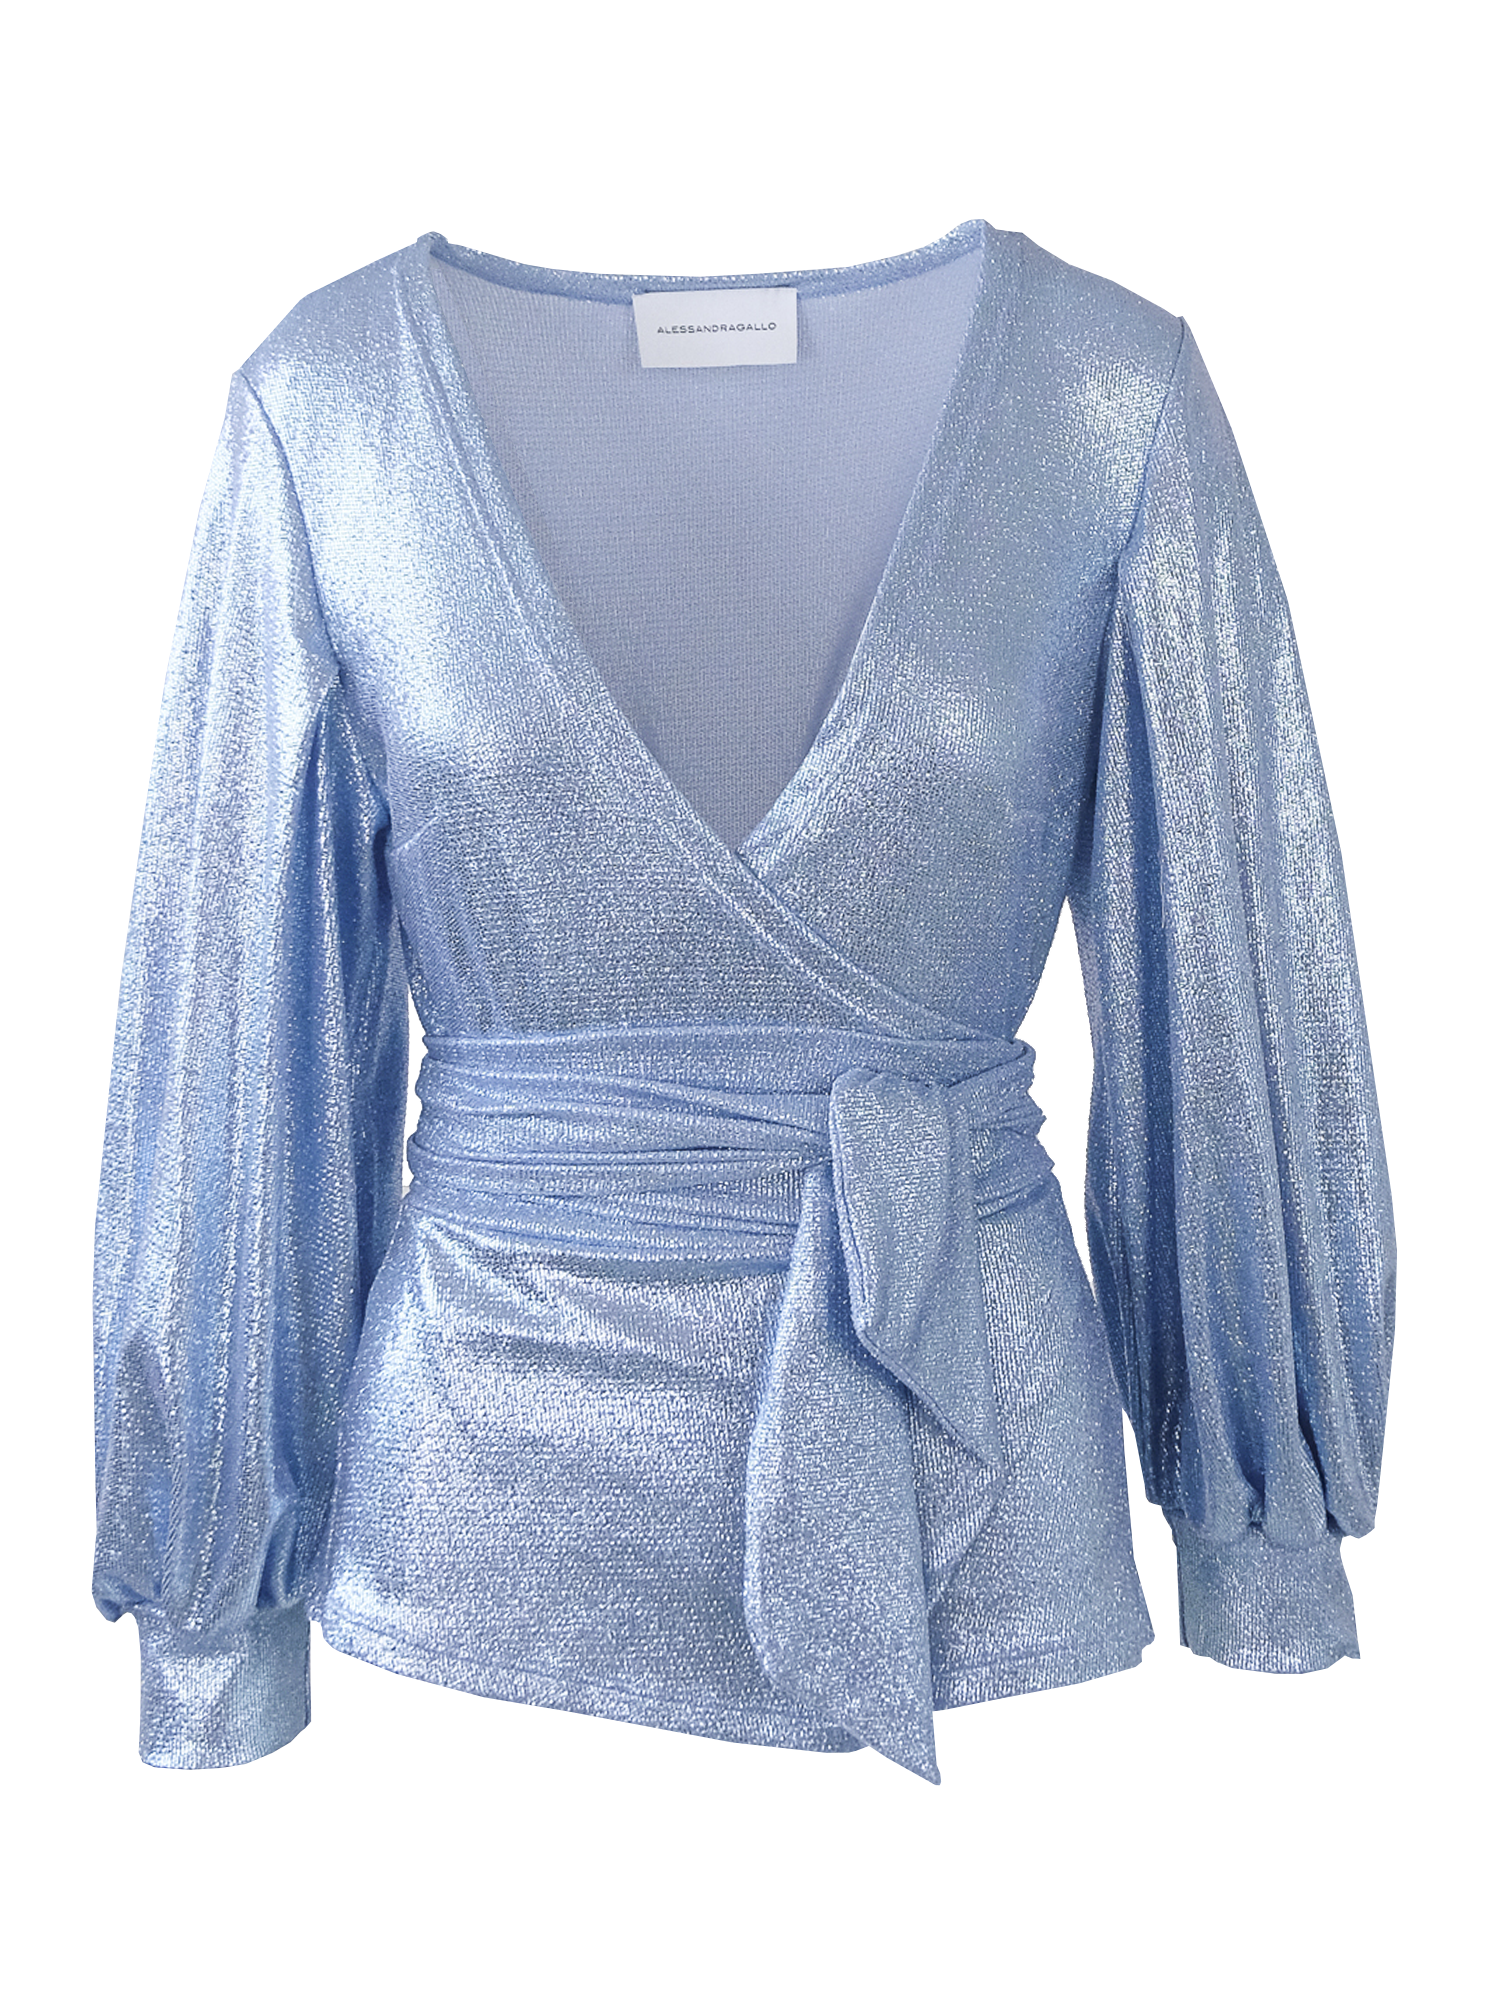 CLOE - light blue lurex kimono shirt